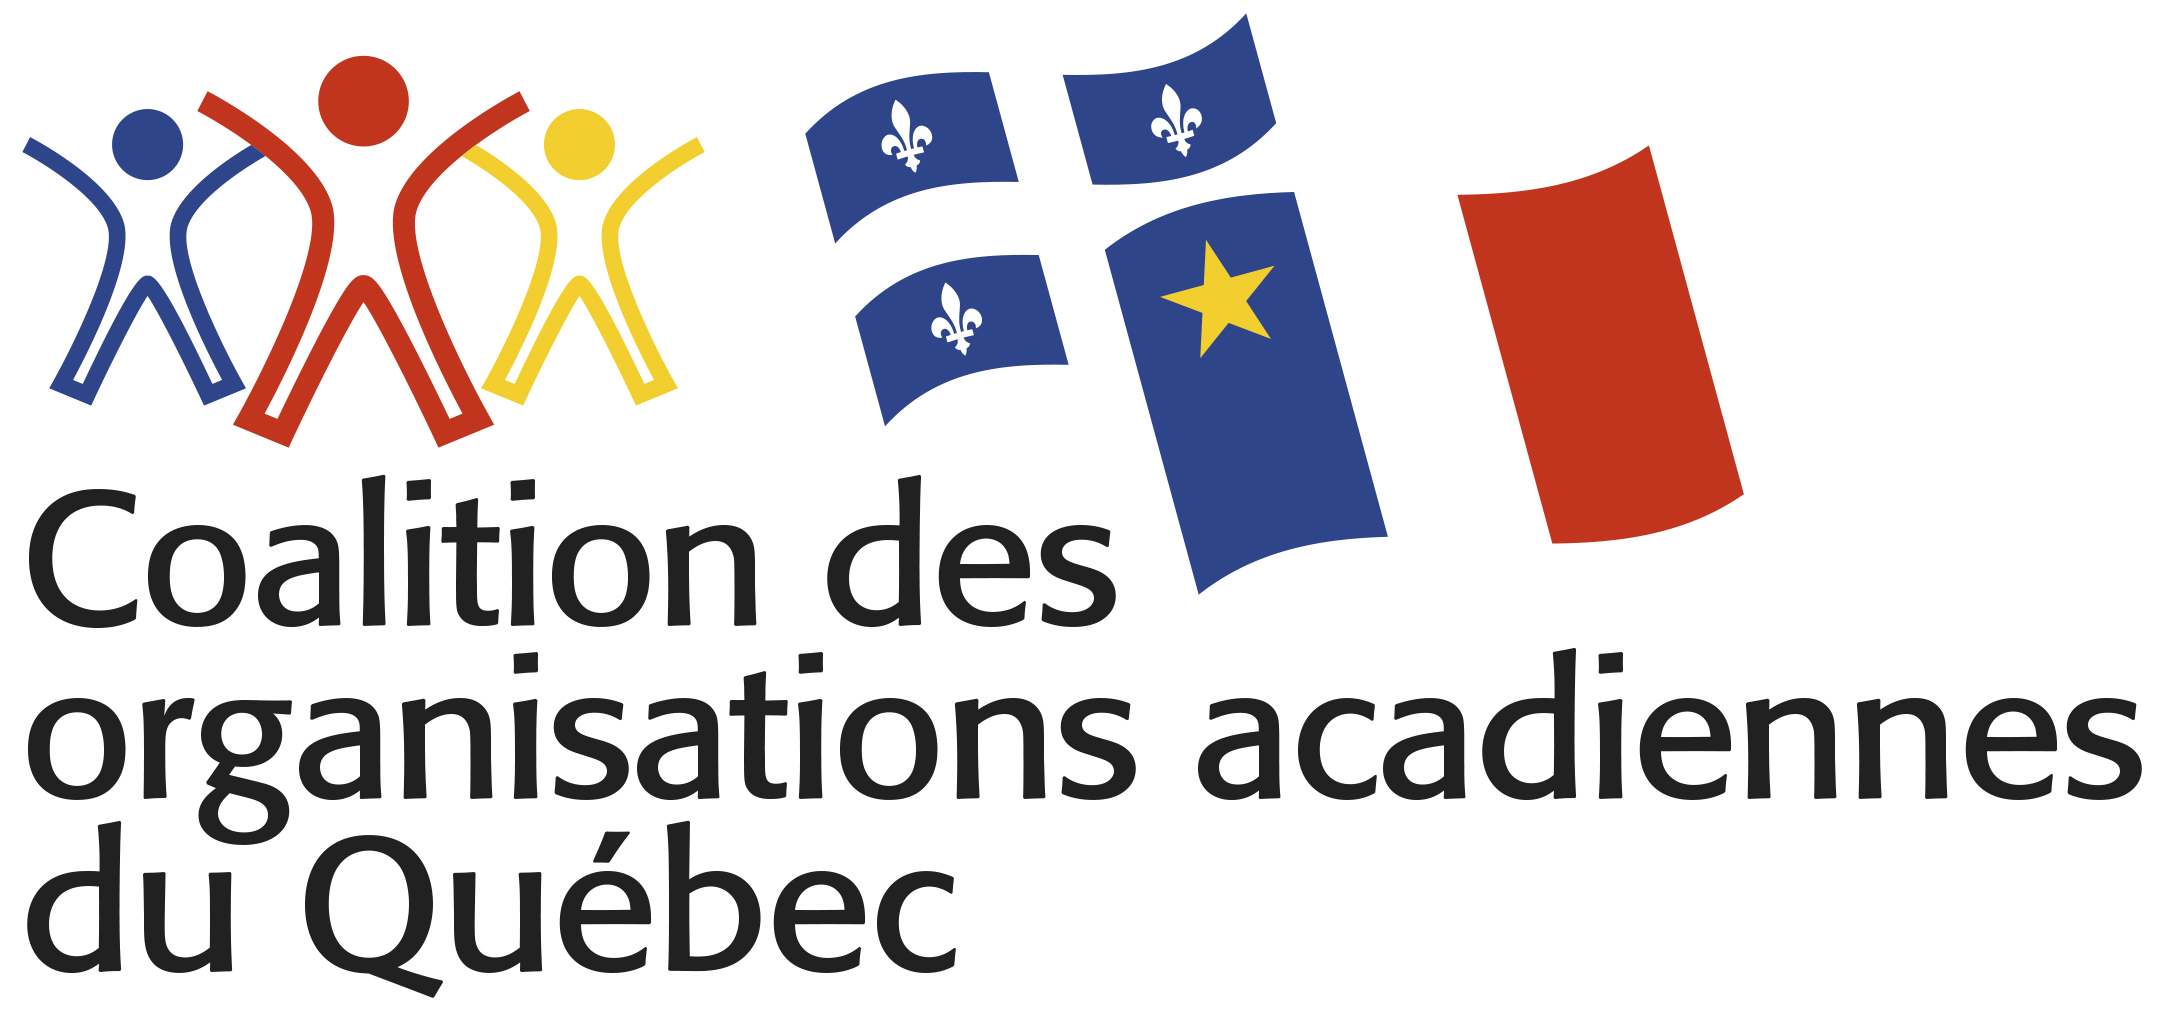 Coalition des organisations acadiennes du Québec Logo - Acadian ...